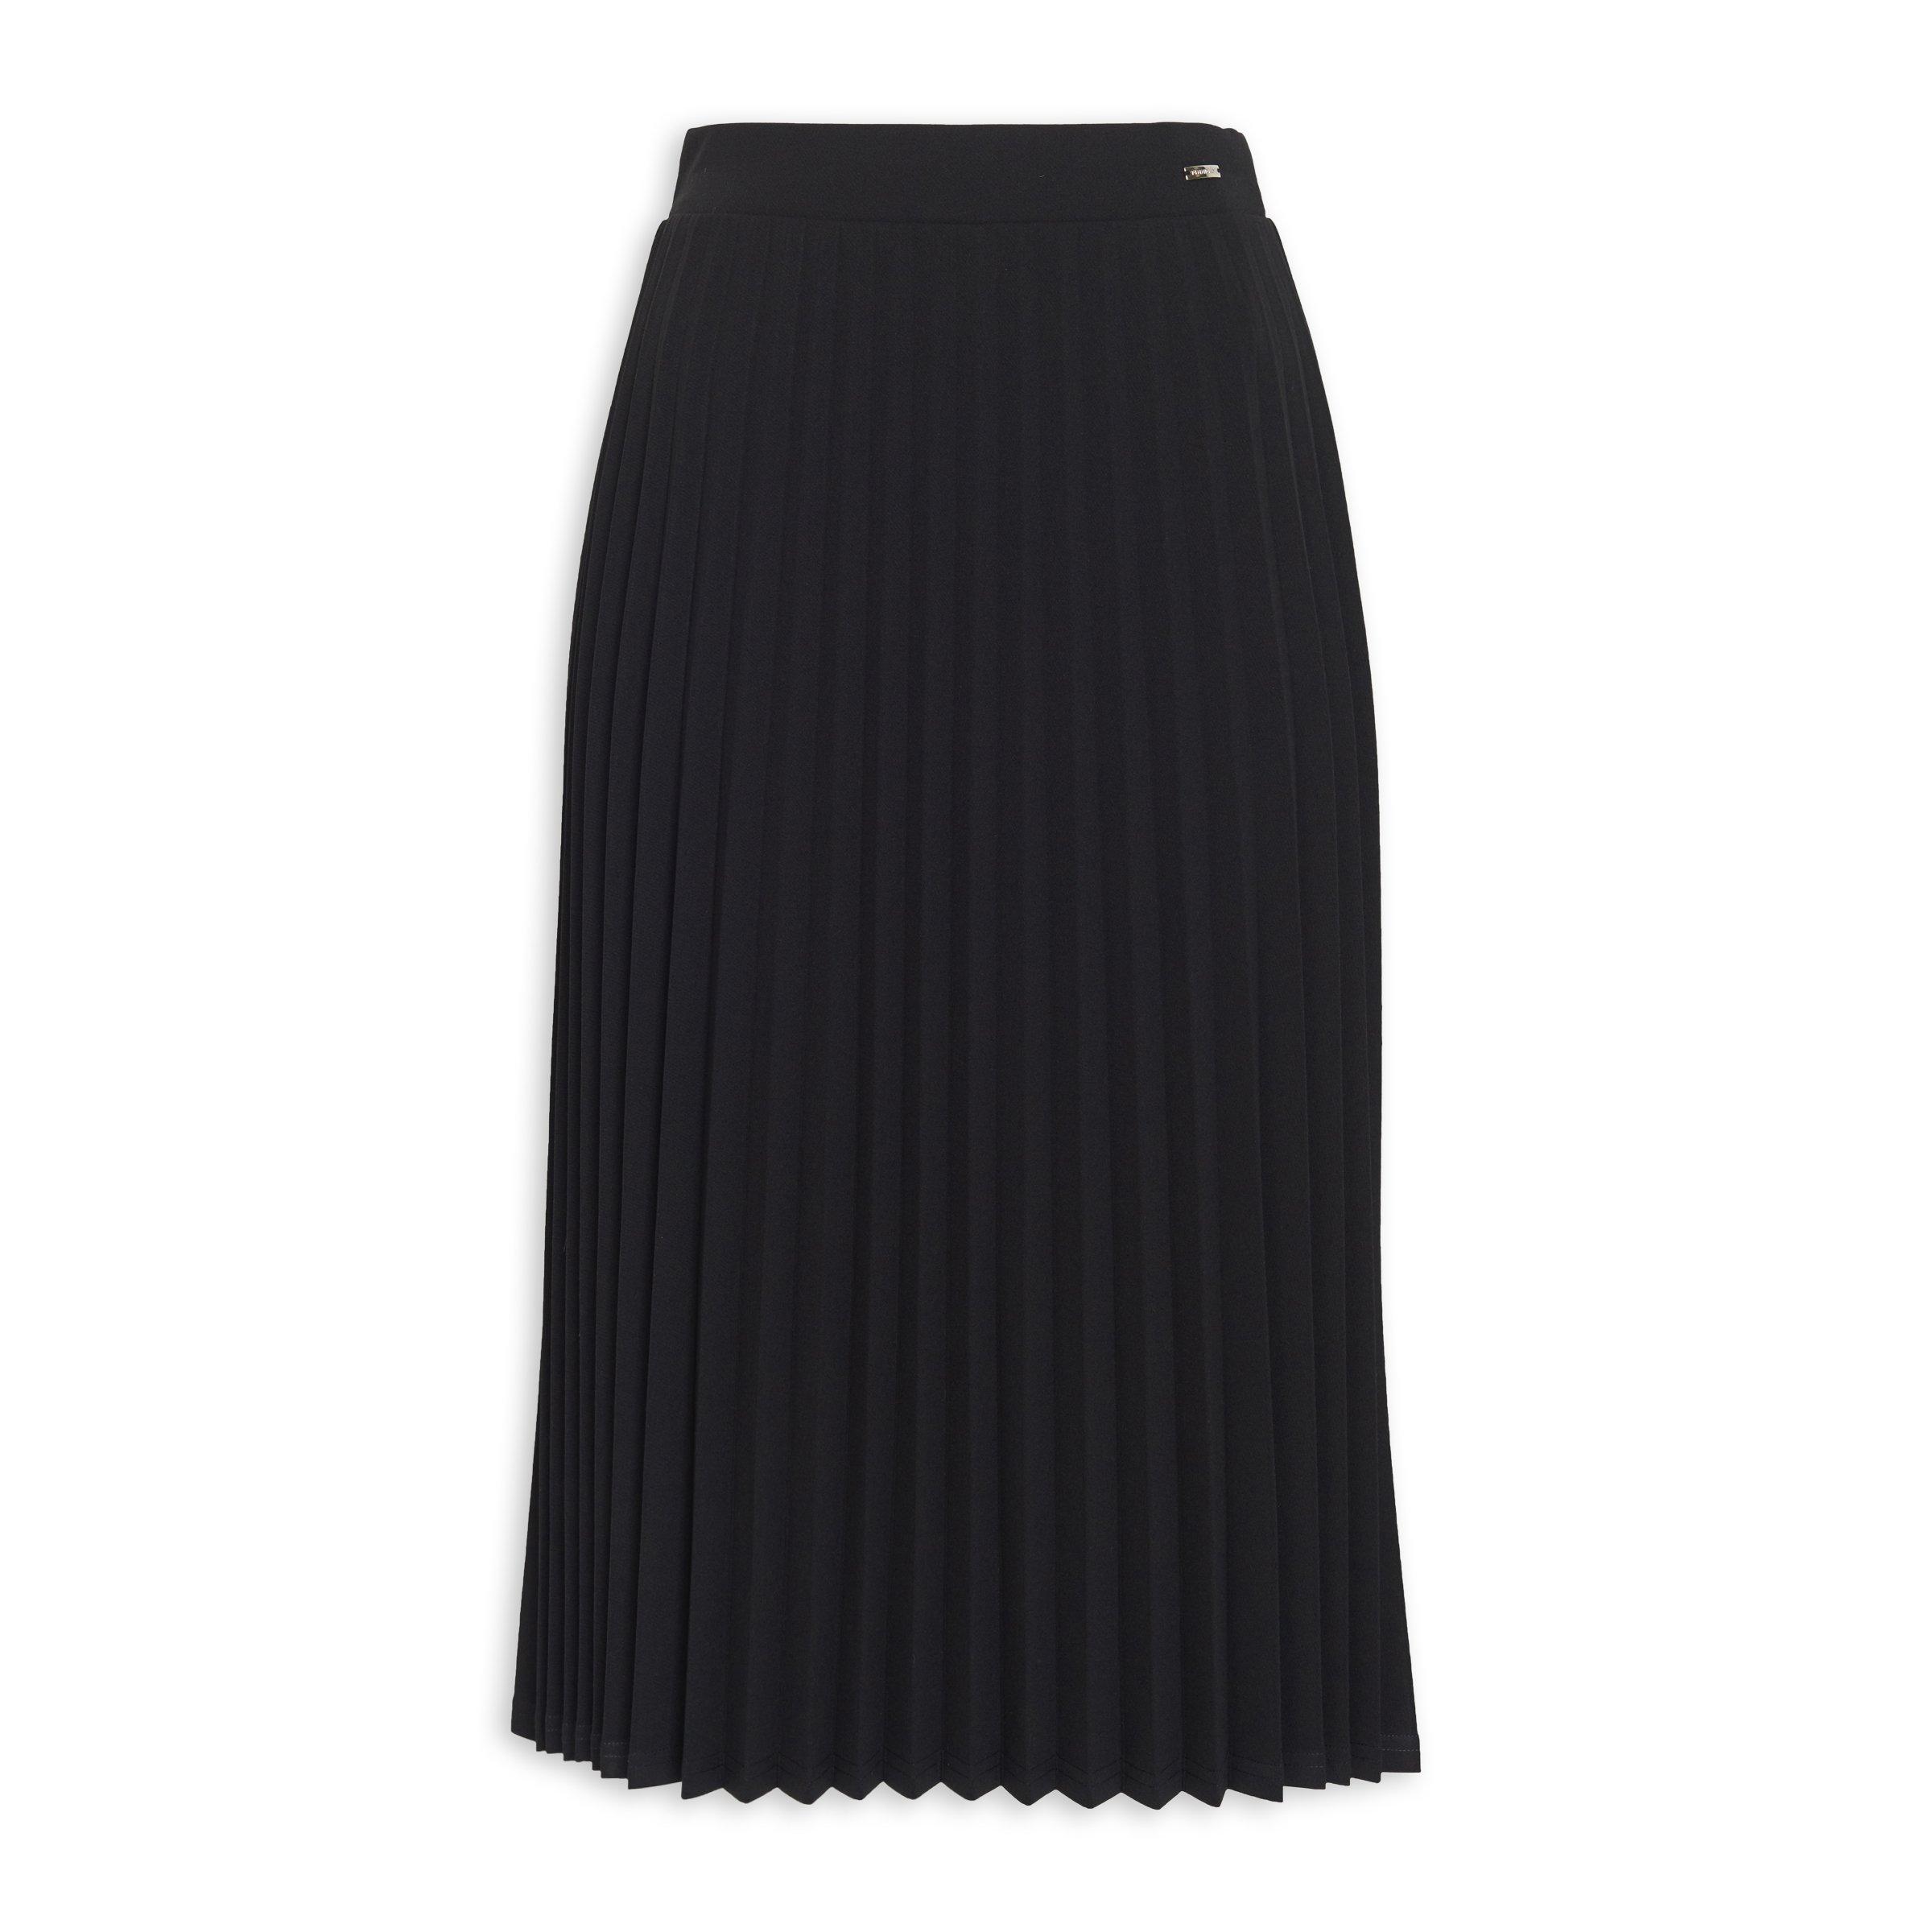 Buy Finnigans Black Pleated Skirt Online | Truworths